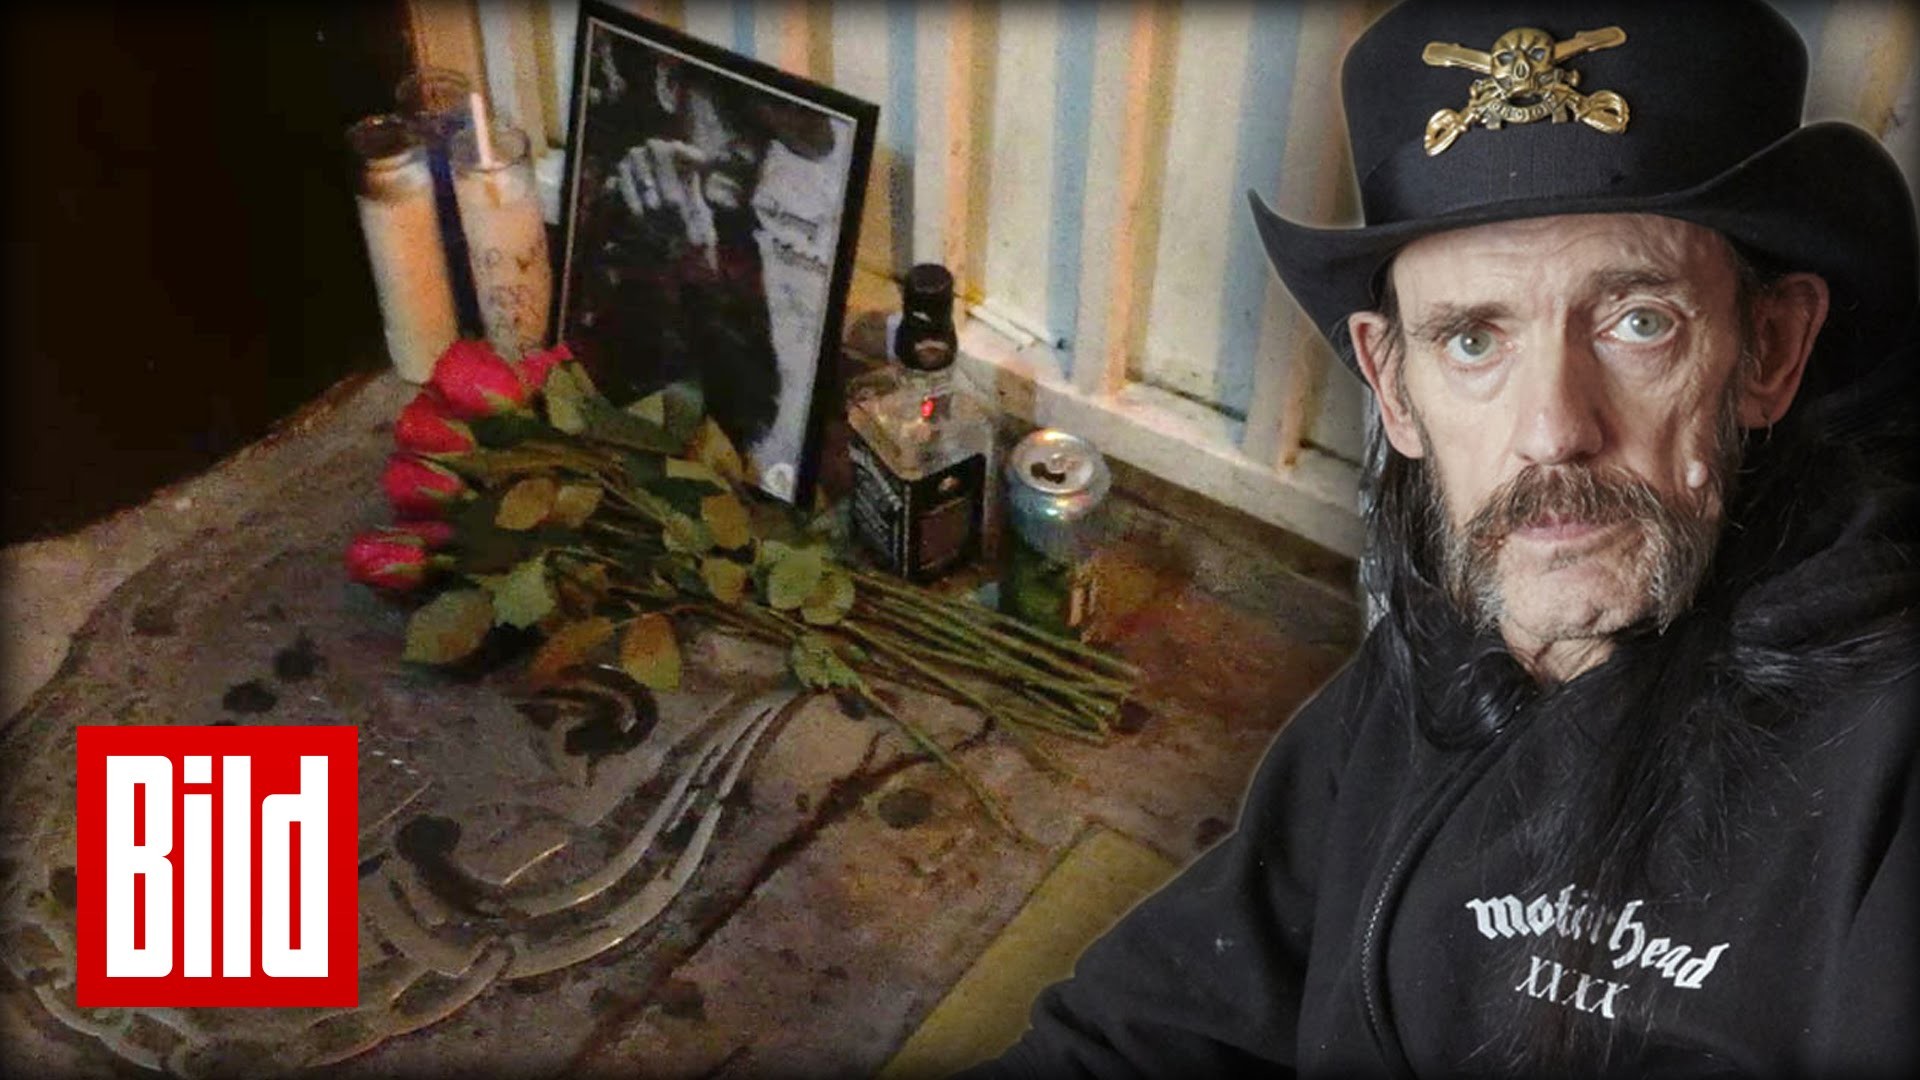 1920x1080 Lemmy Kilmister gestorben (†70) - GÃ¤ste seiner Stammbar trauern um MotÃ¶rhead-SÃ¤nger  - YouTube